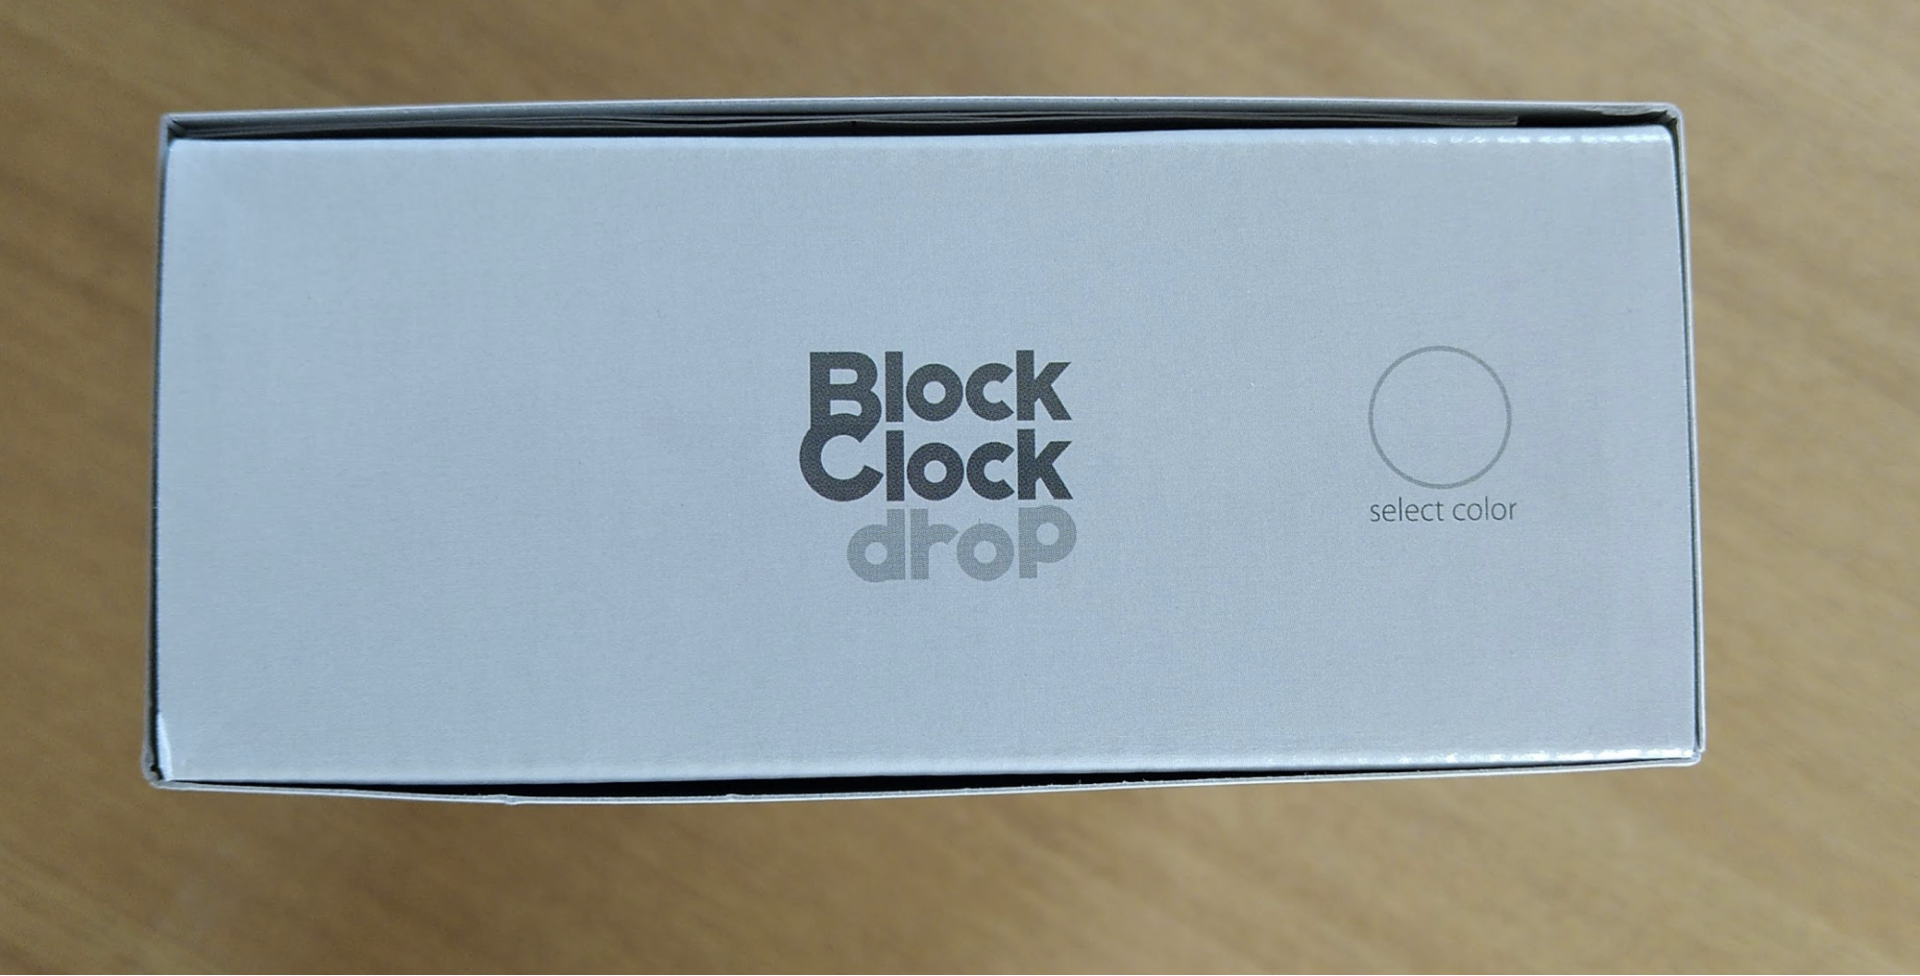 Block Clock(ブロッククロック) drop(ドロップ)パッケージ下部